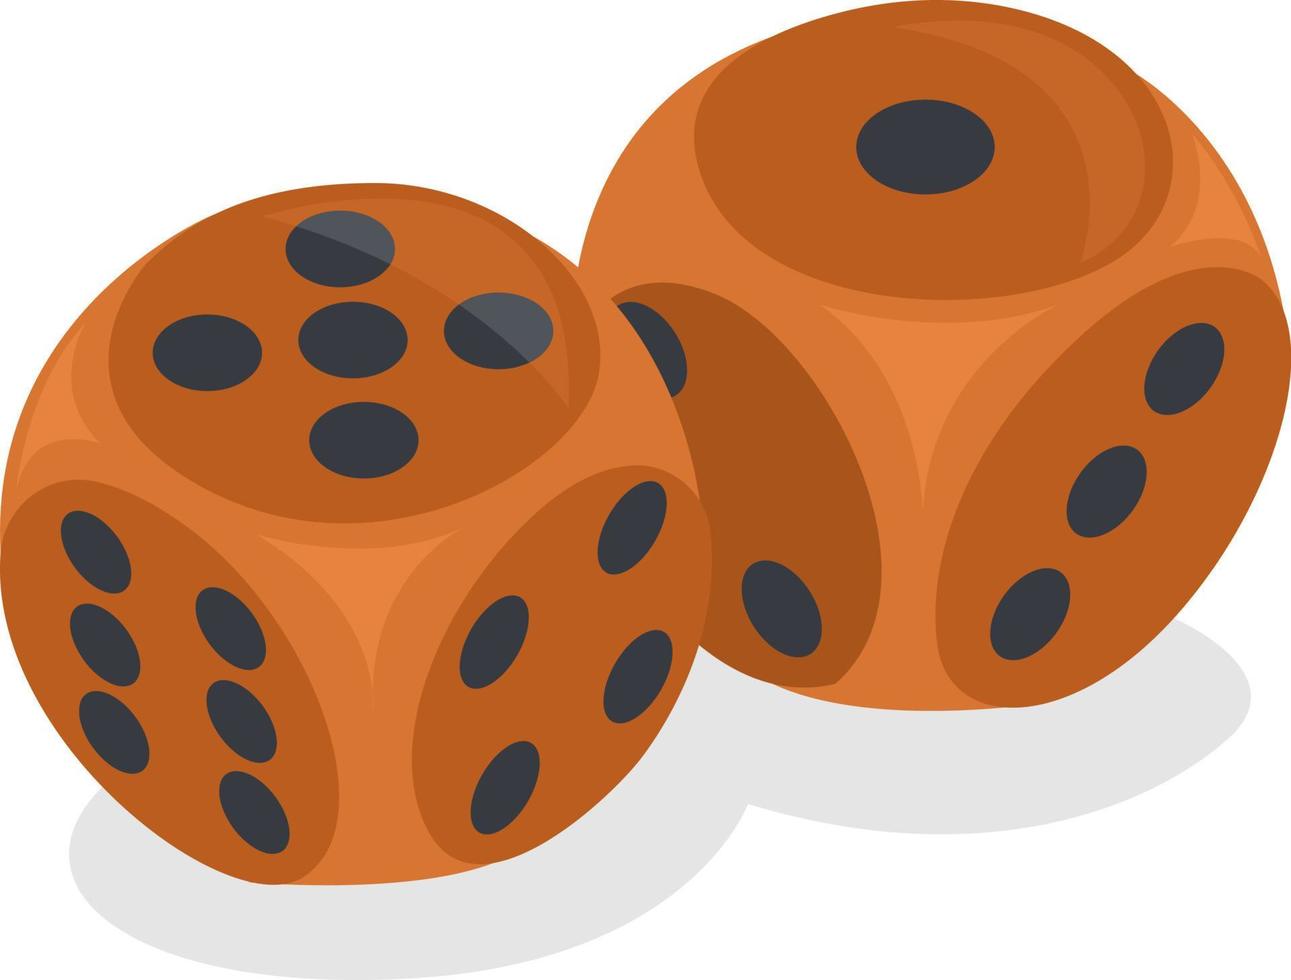 Orange dices, illustration, vector on white background